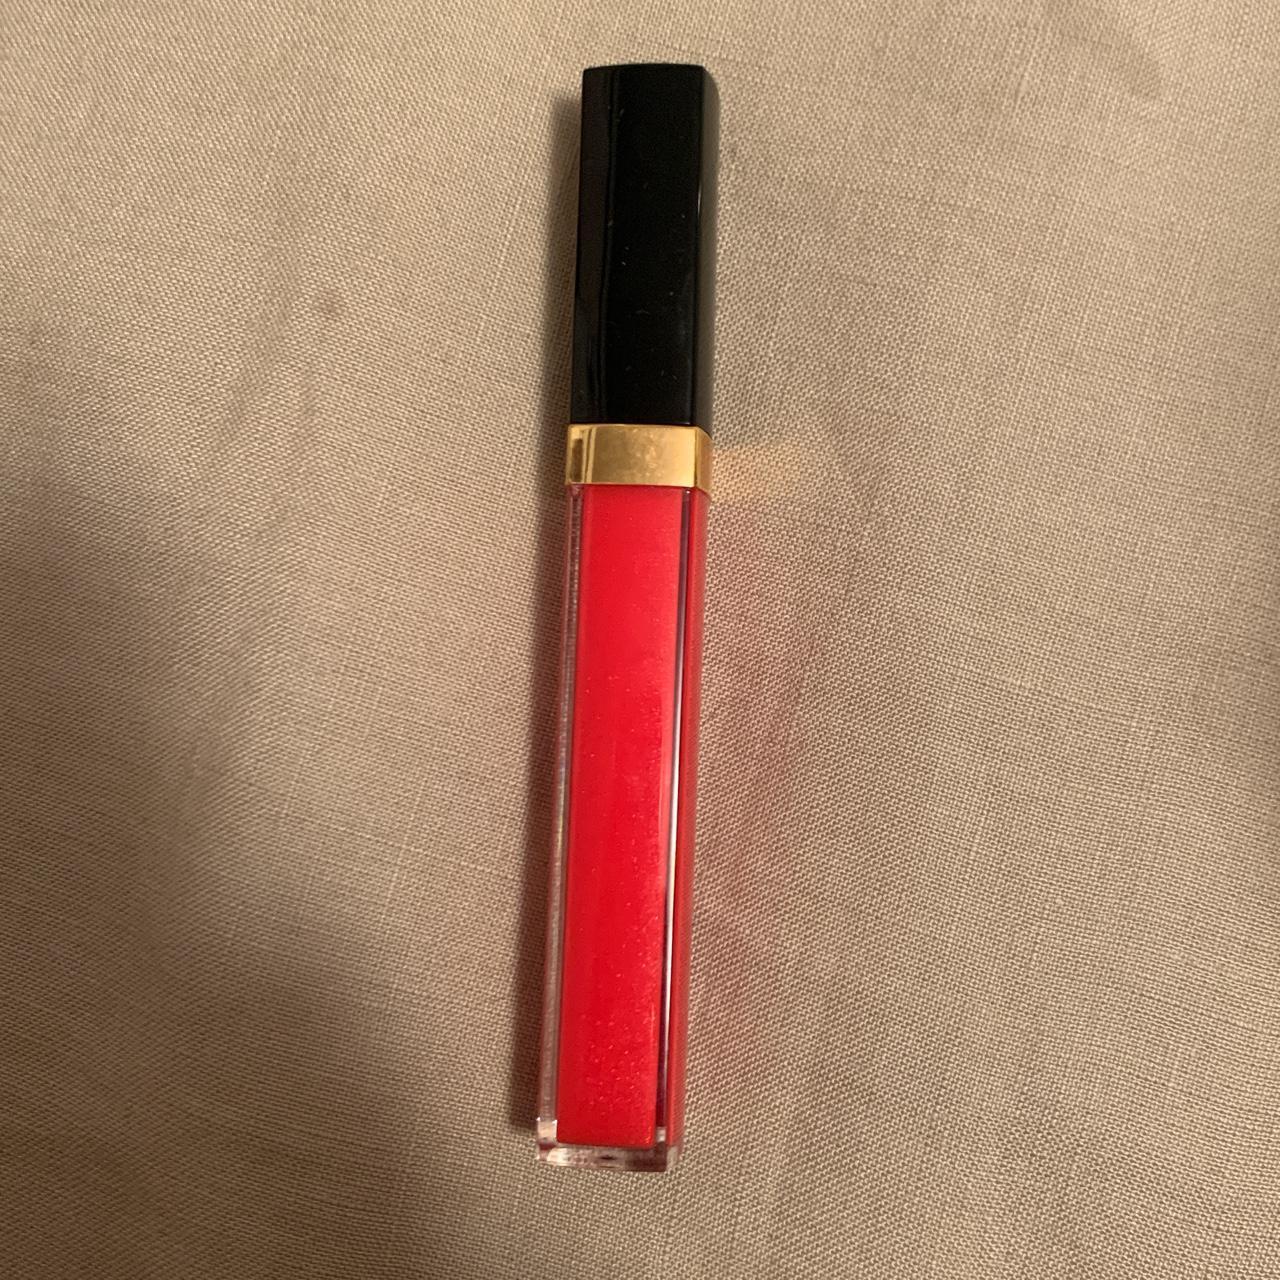 Ræv Regeringsforordning blast Chanel lip gloss Gives a red tint I have two so I... - Depop